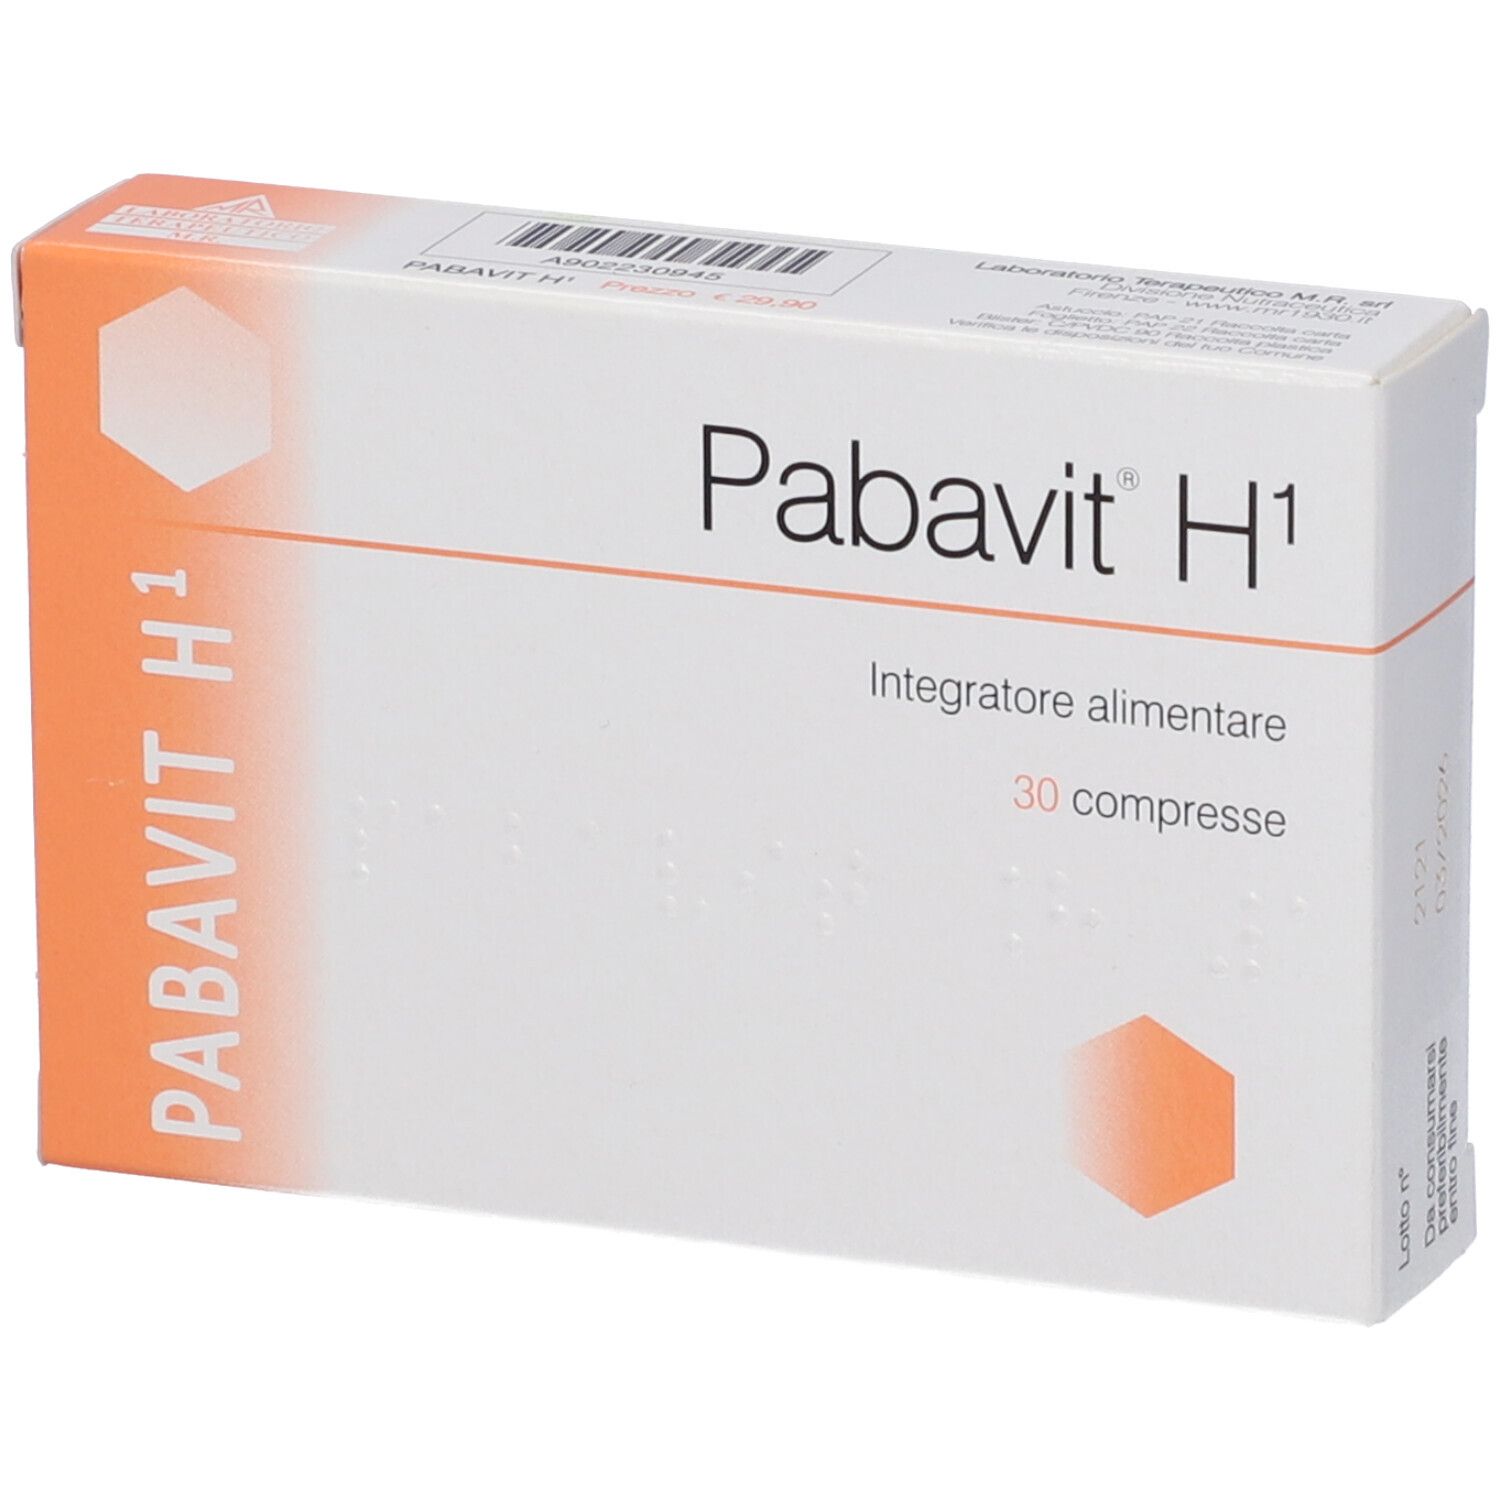 Pabavit H1